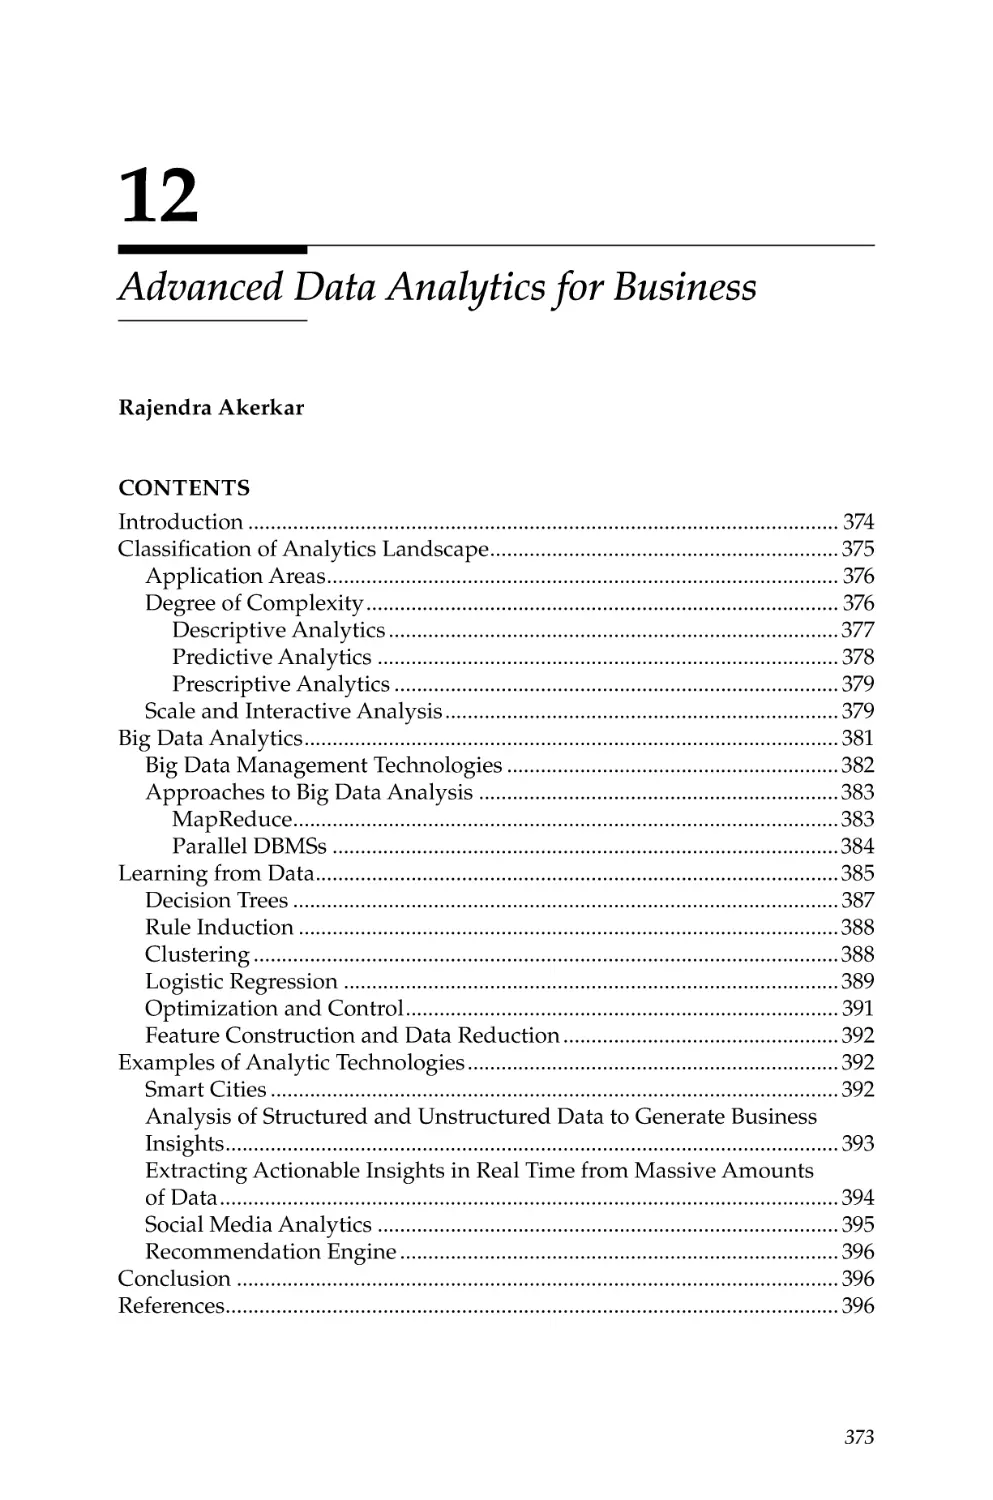 12. Advanced Data Analytics for Business